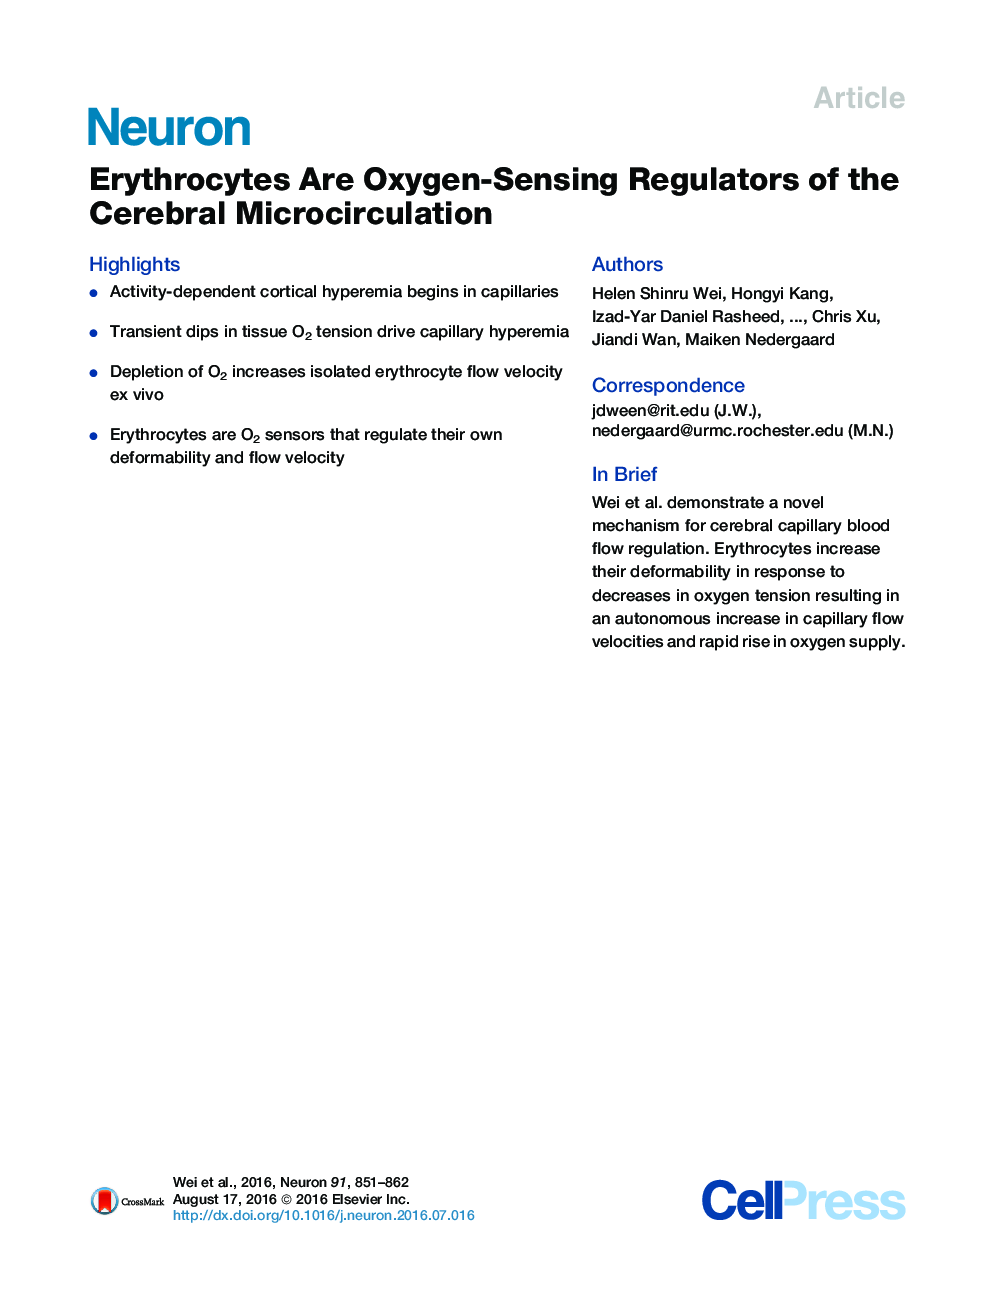 Erythrocytes Are Oxygen-Sensing Regulators of the Cerebral Microcirculation